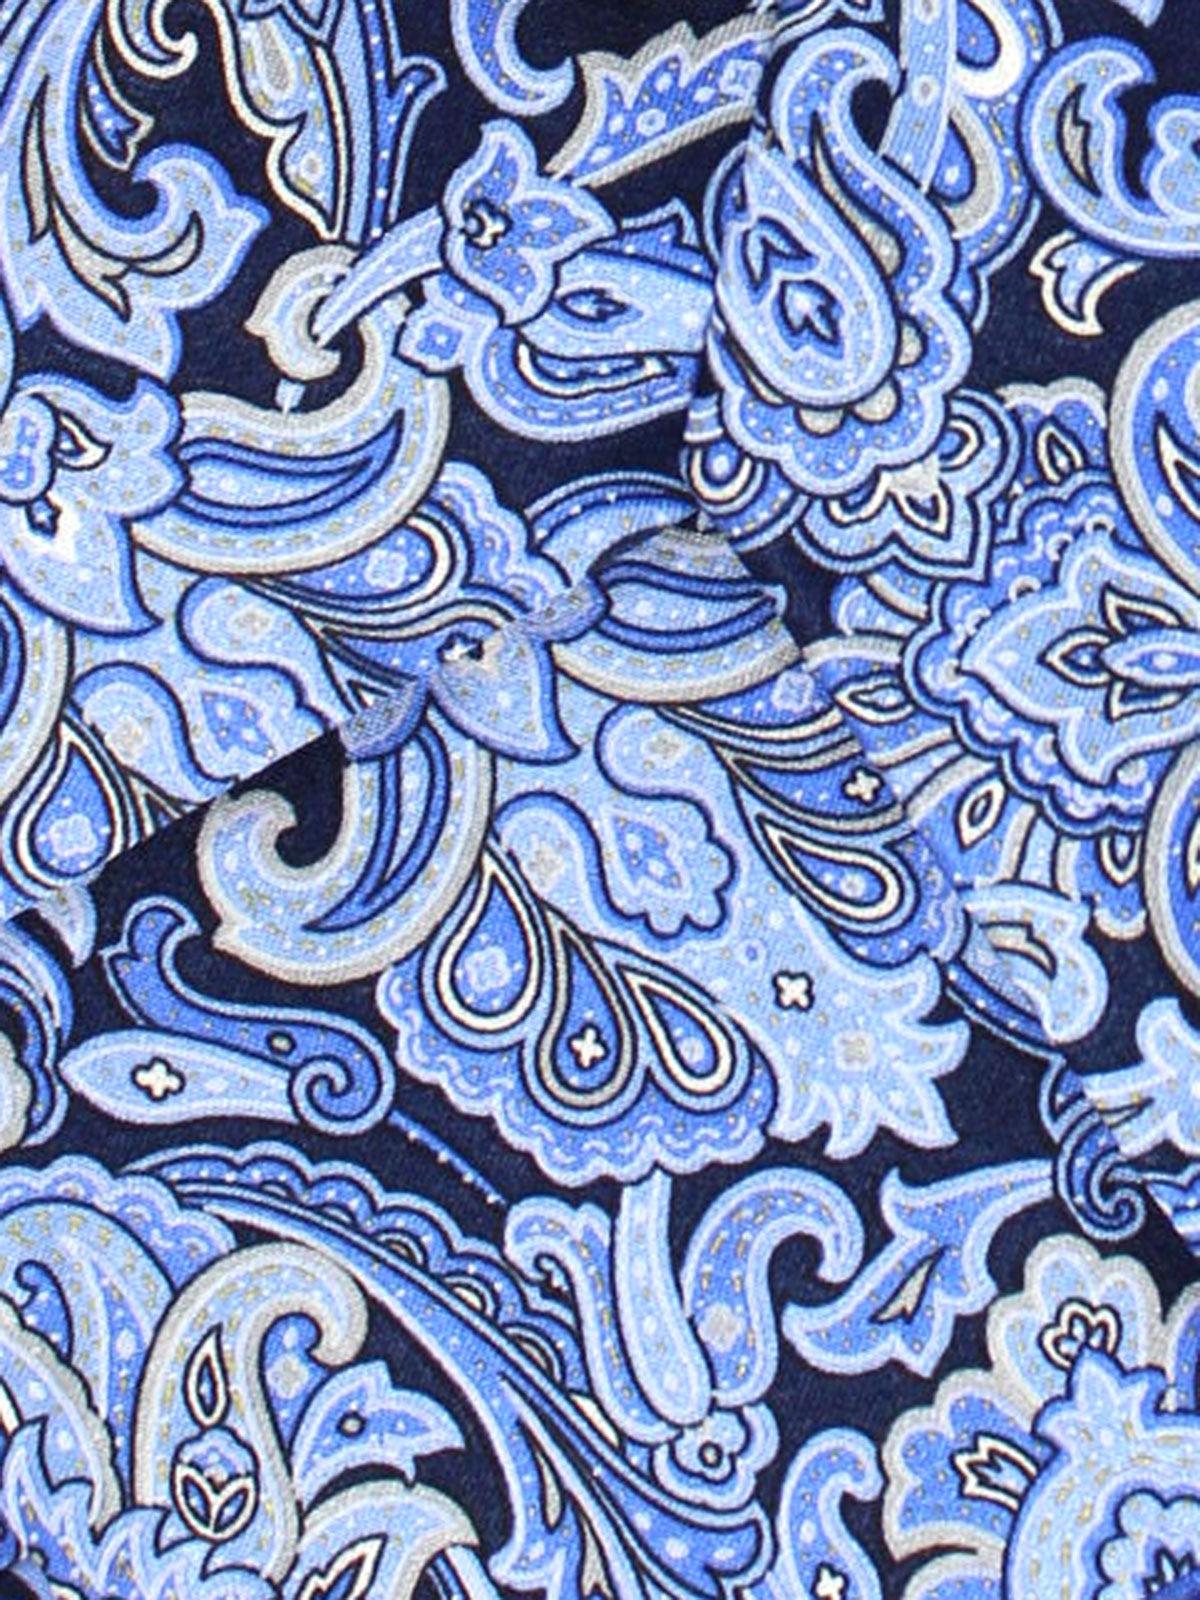 Stefano Ricci Tie Blue Ornamental - Pleated Silk